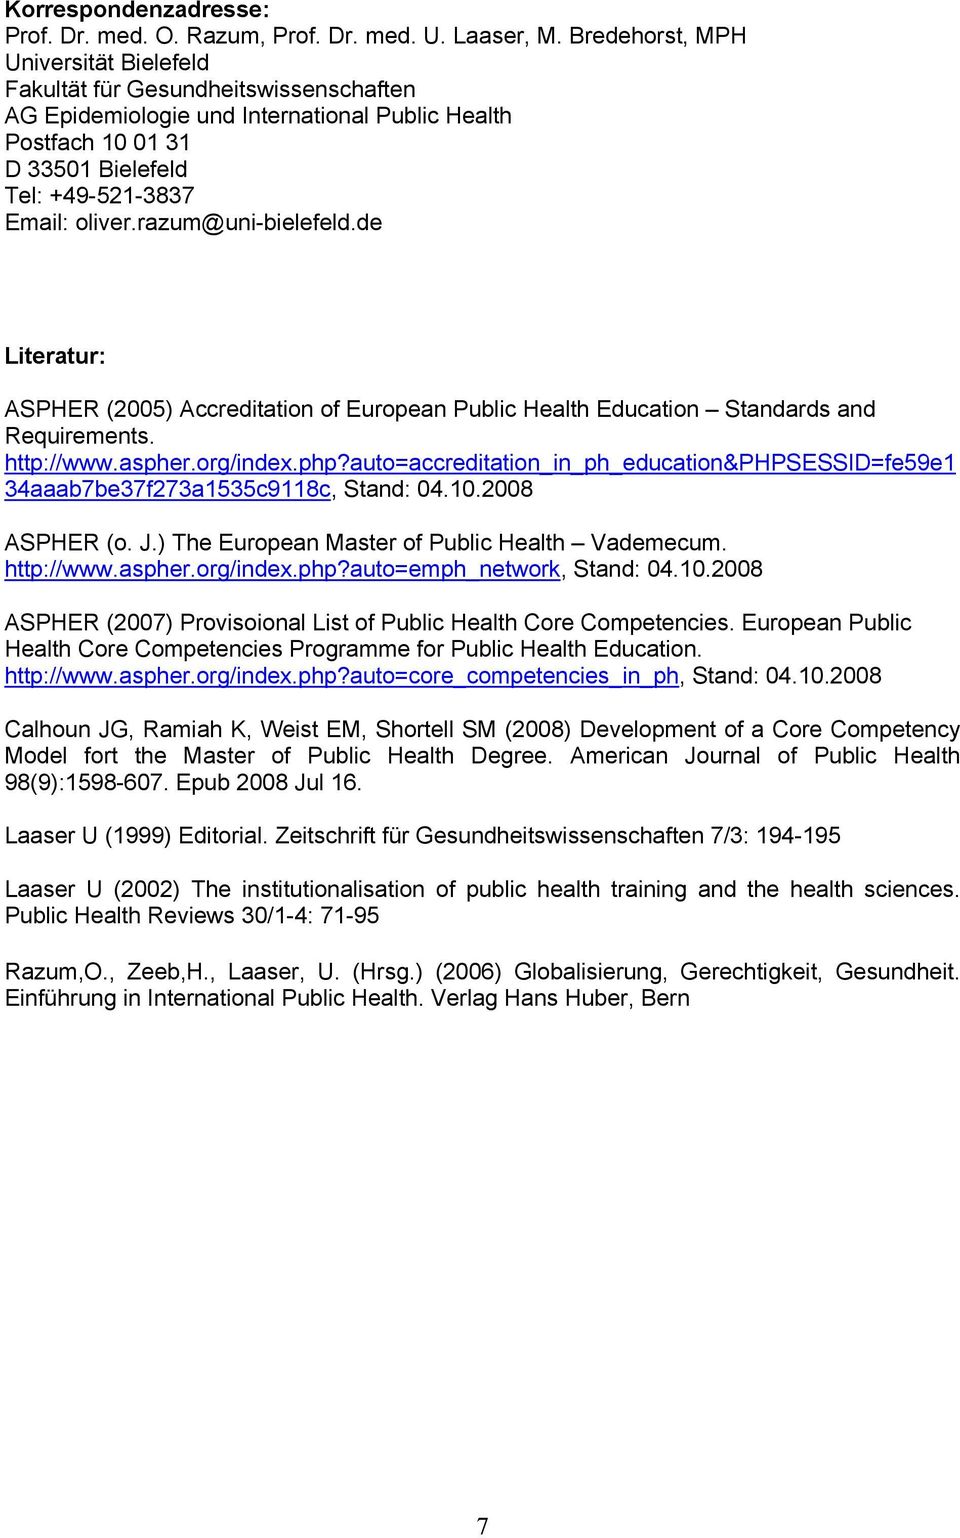 razum@uni-bielefeld.de Literatur: ASPHER (2005) Accreditation of European Public Health Education Standards and Requirements. http://www.aspher.org/index.php?